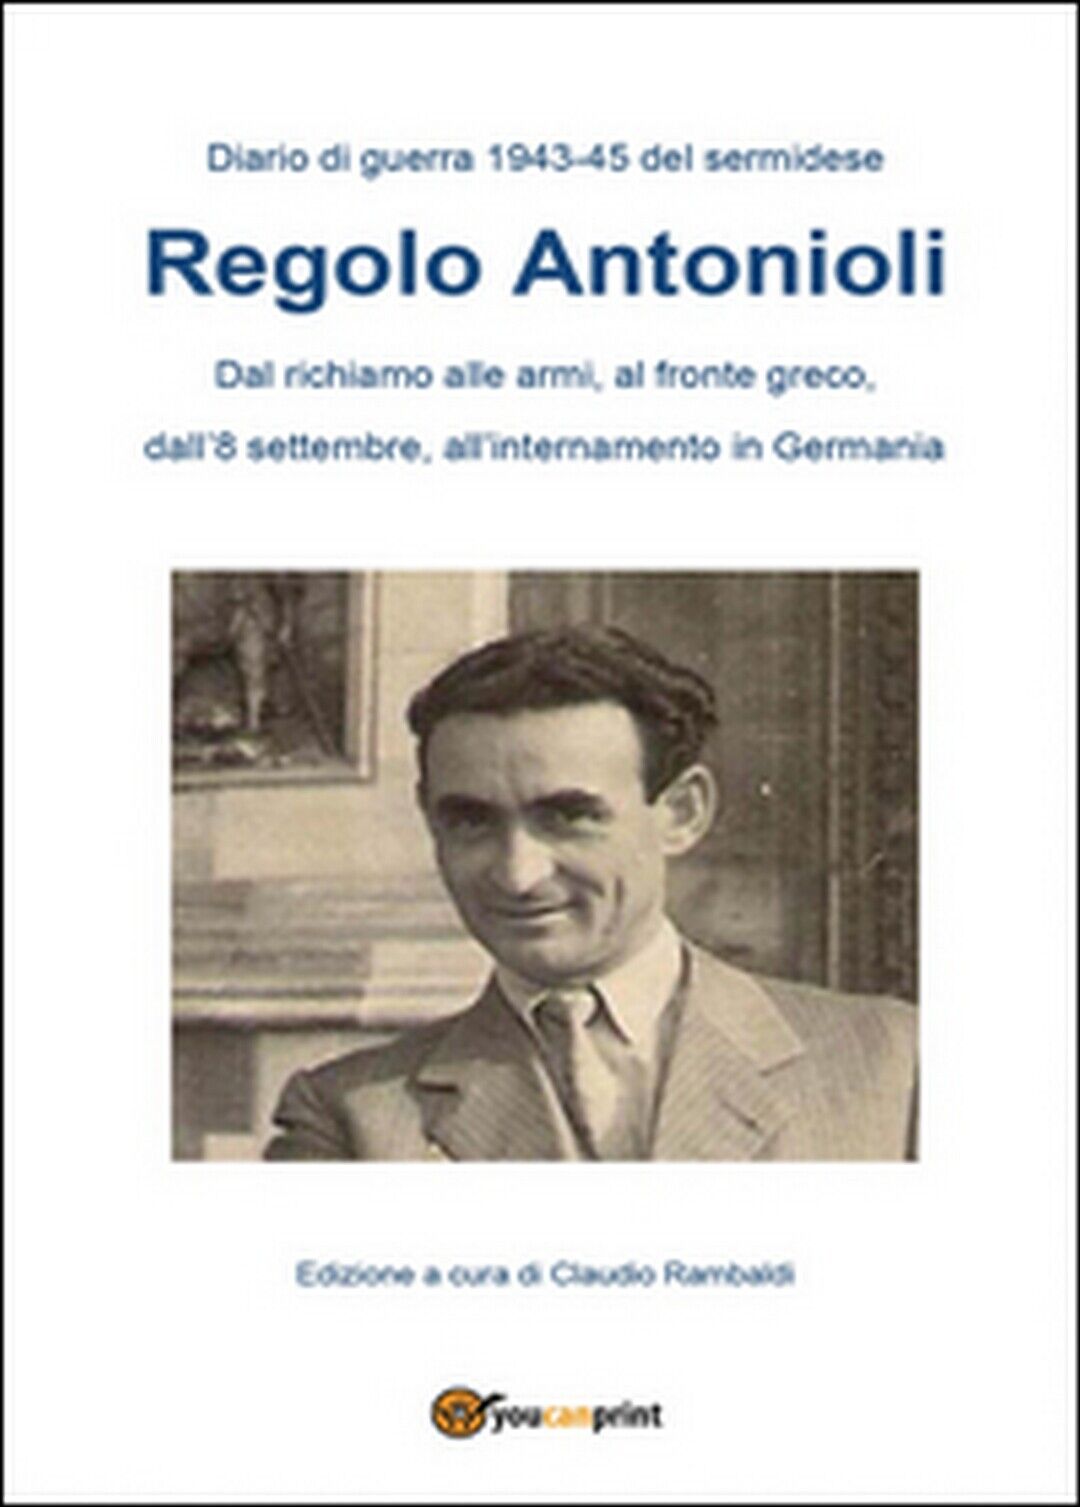 Diario di guerra (1943-45) del sermidese Regolo Antonioli  di Claudio Rambaldi